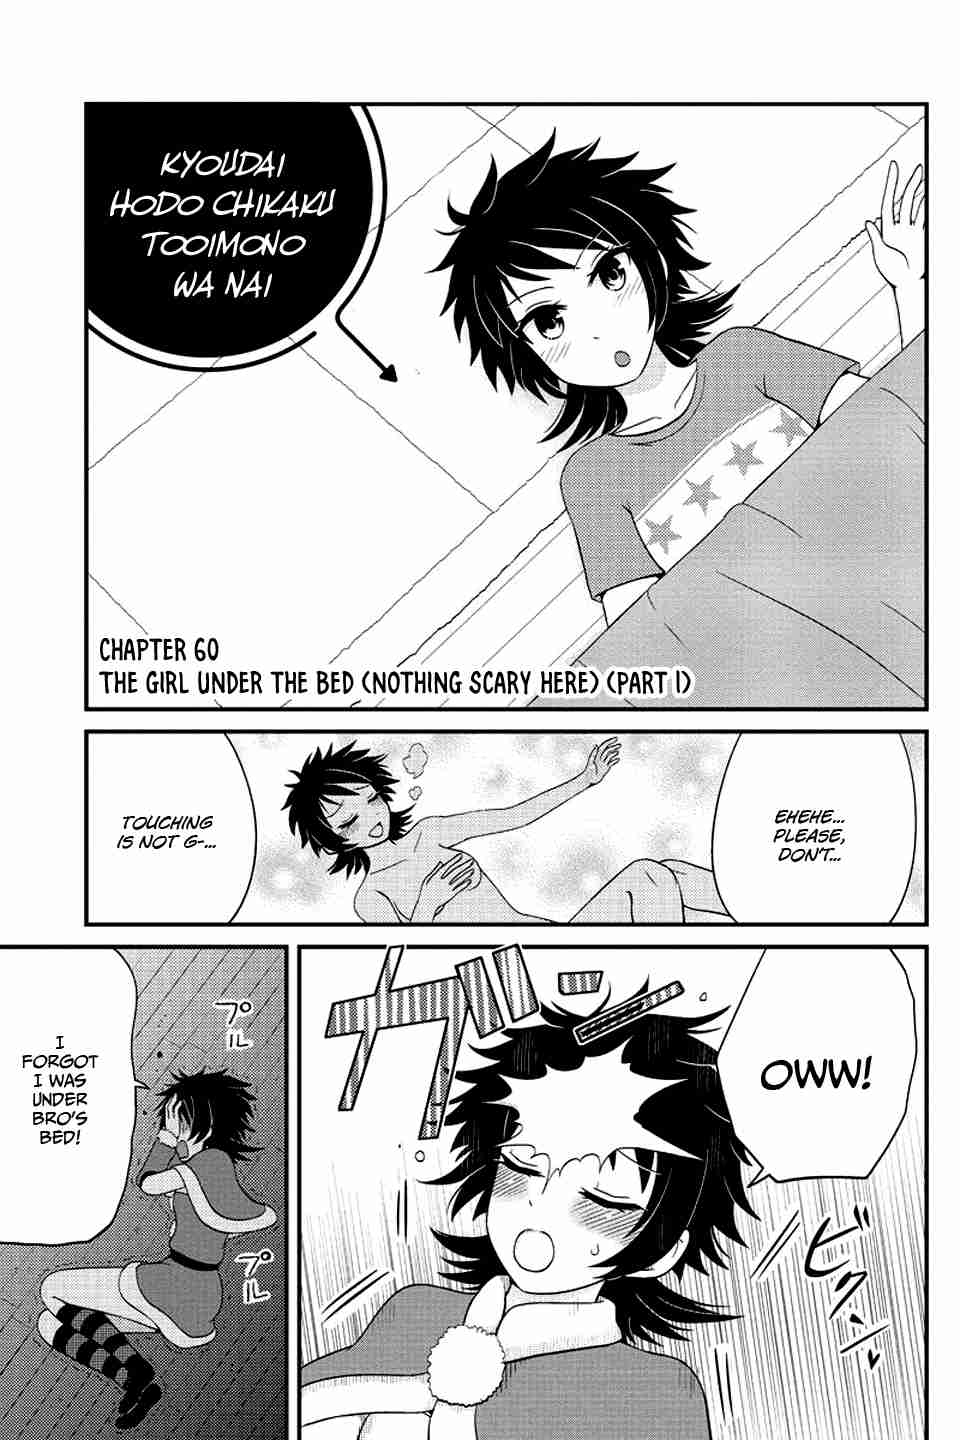 Kyoudai hodo Chikaku Tooimono wa Nai Vol. 4 Ch. 60 The girl under the bed (Nothing scary here) (Part 1)